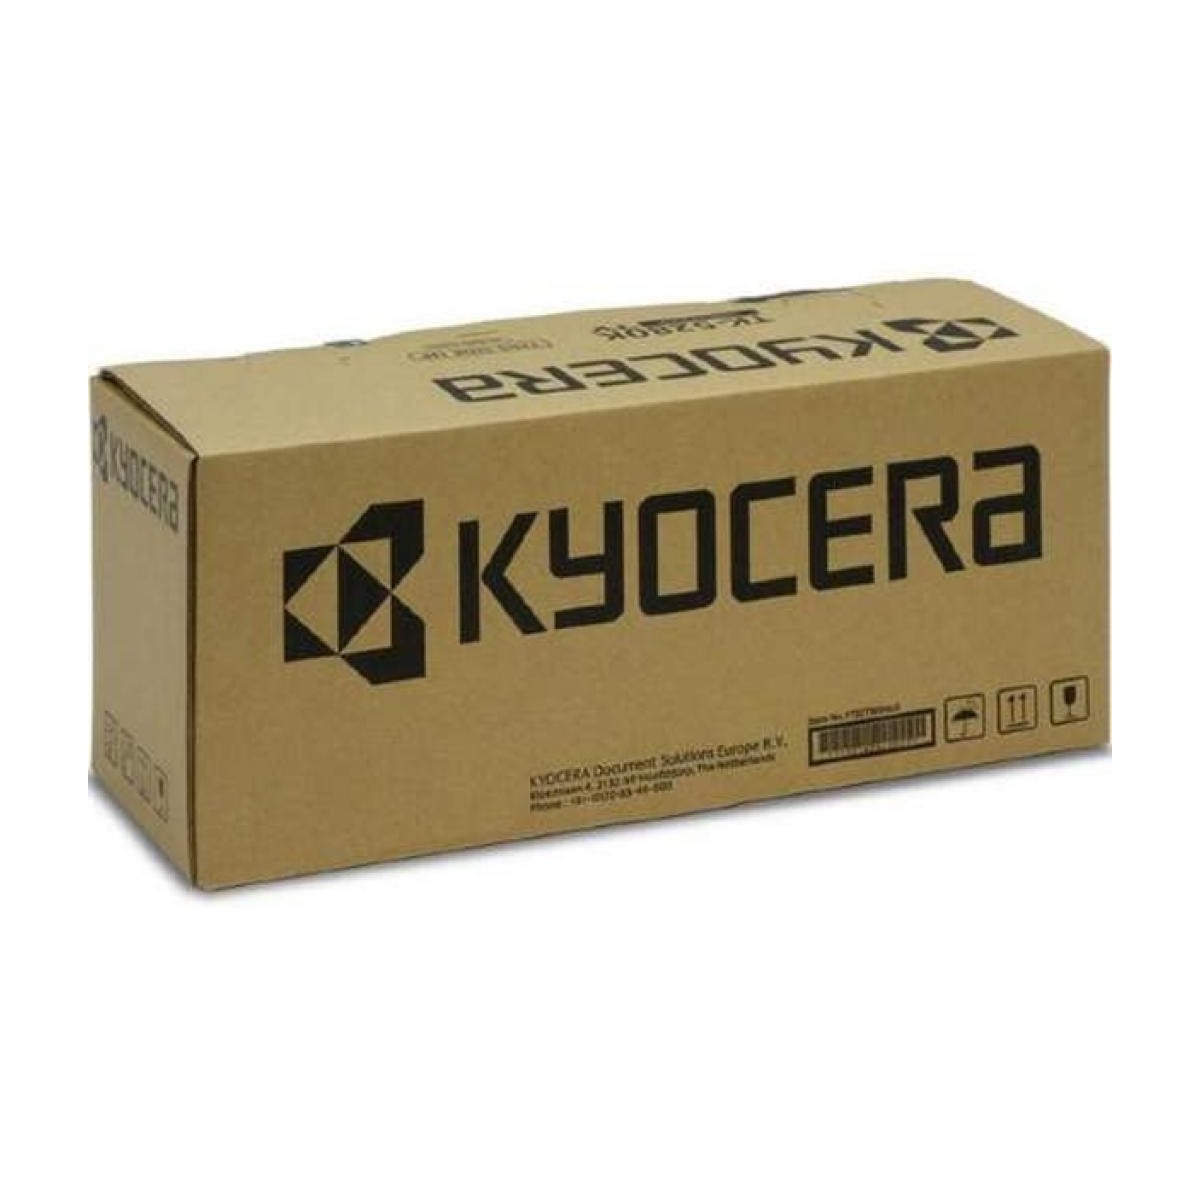 Kyocera DK-7105 - Original - Kyocera - TASKalfa 3010 i/3510 i - 1 pc(s) - Laser printing